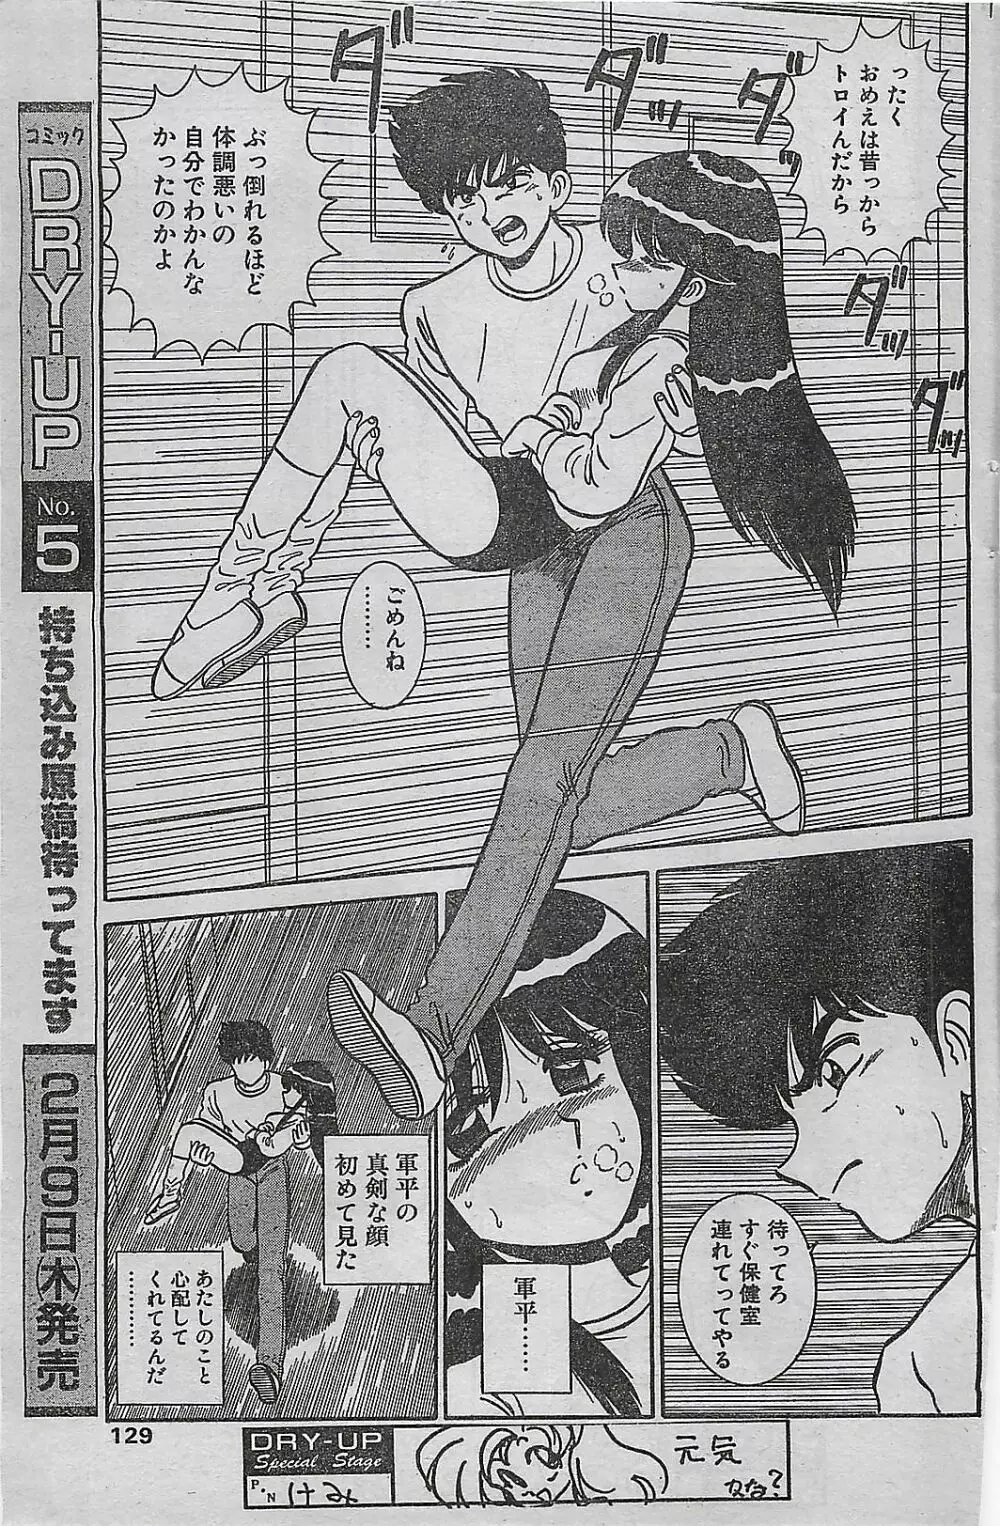 COMIC ドライ-アップ No.4 1995年02月号 129ページ